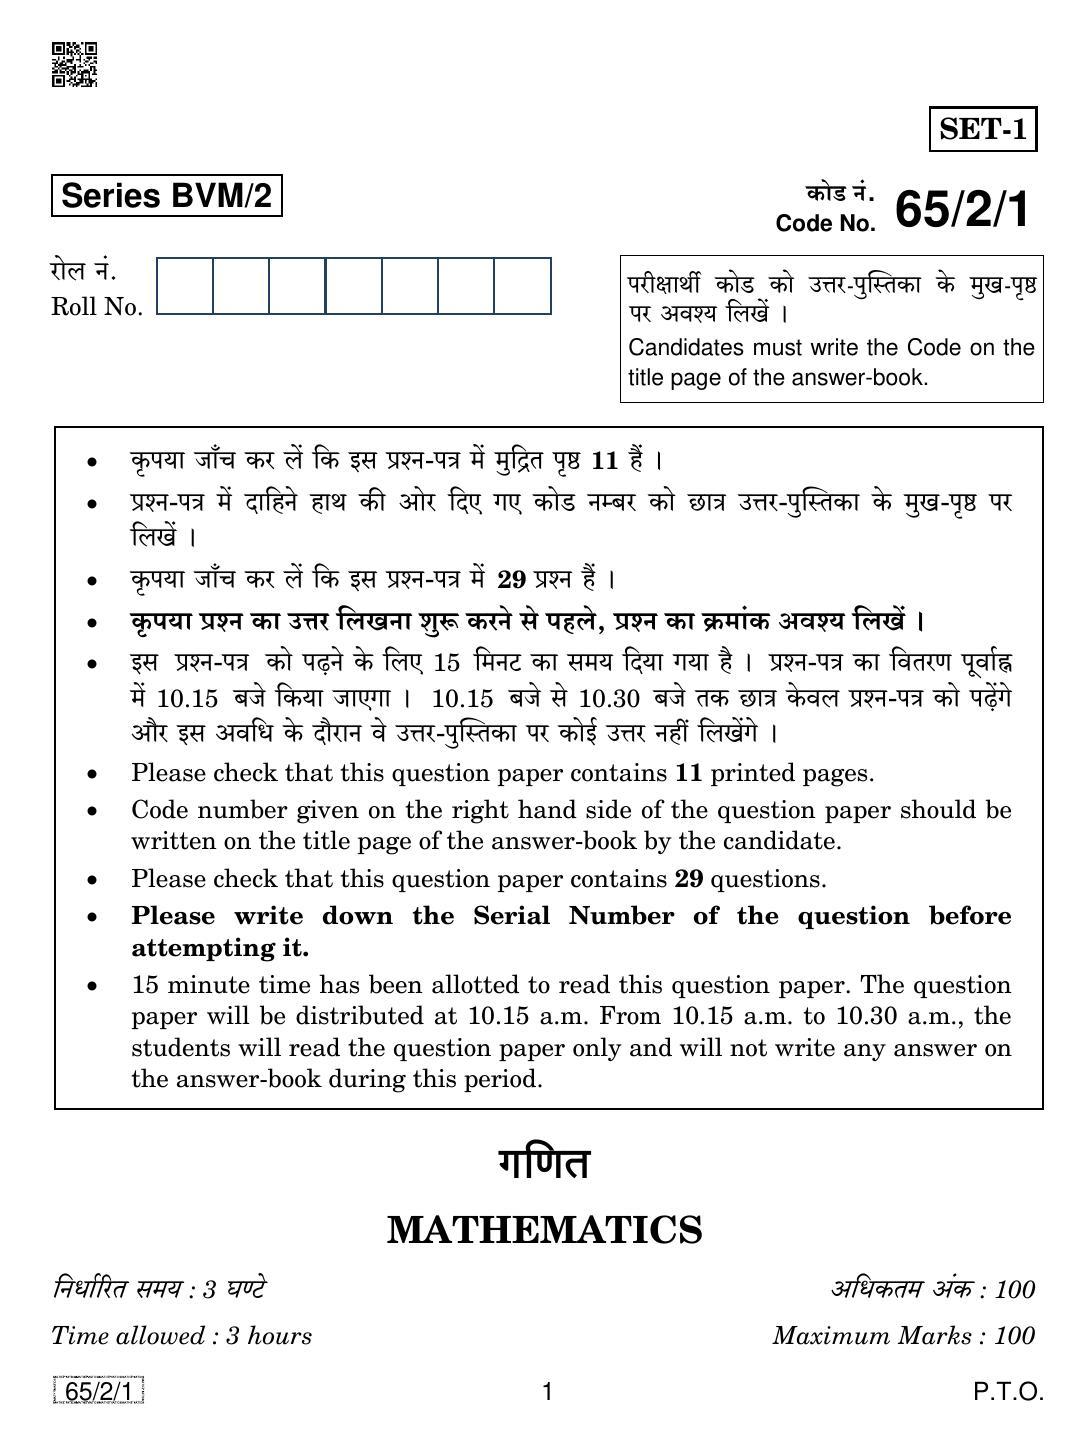 CBSE Class 12 65-2-1 Mathematics 2019 Question Paper - Page 1